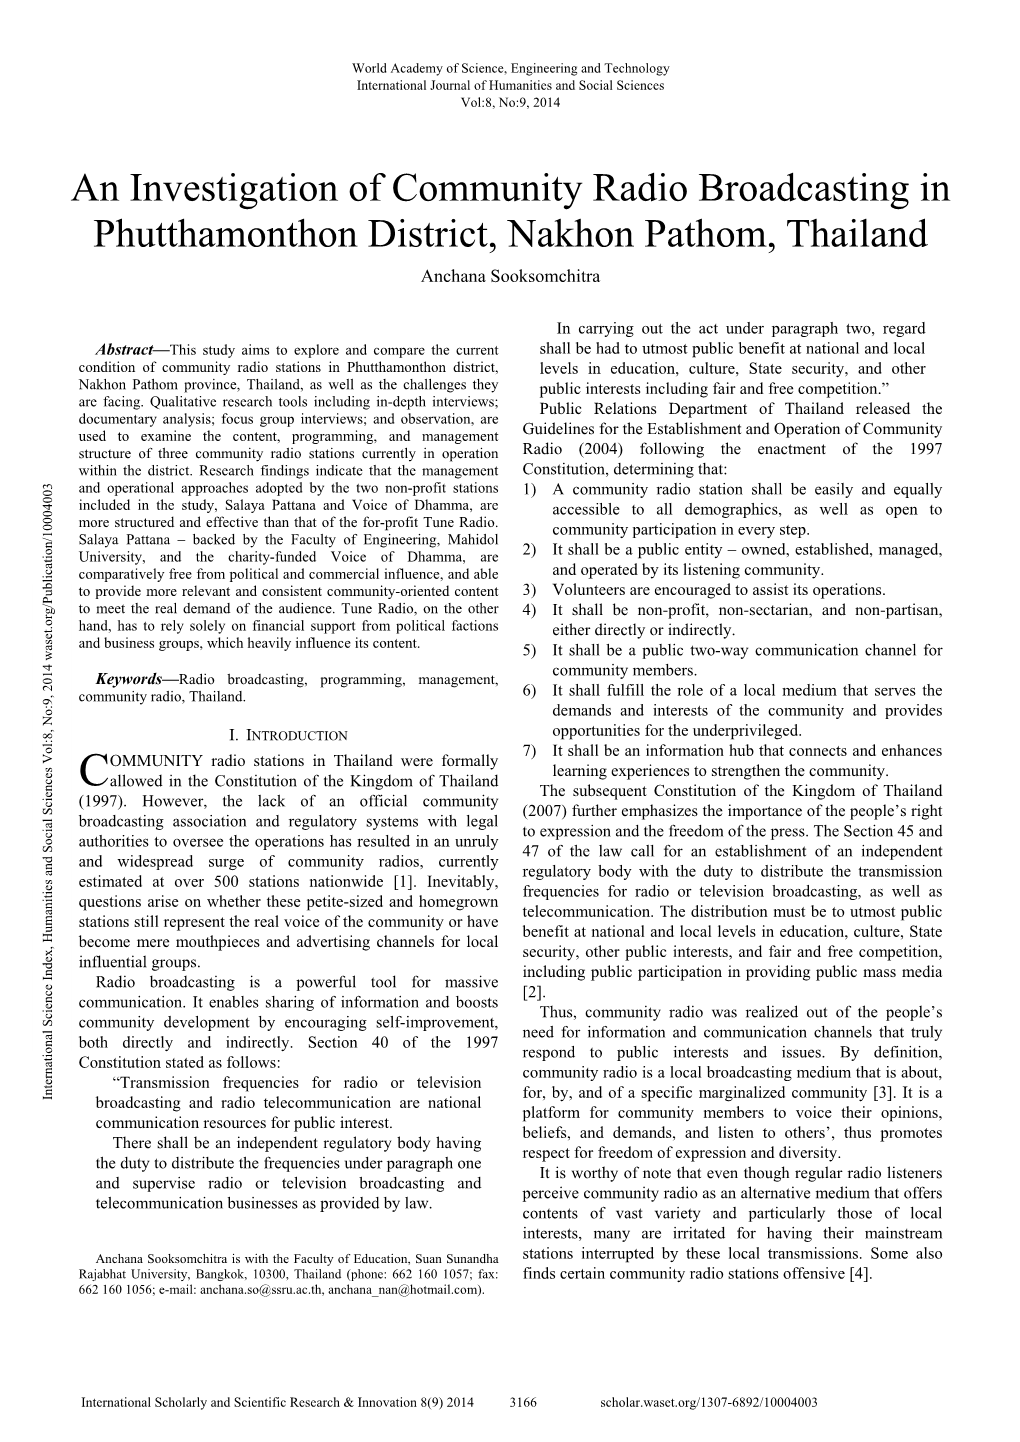 An Investigation of Community Radio Broadcasting in Phutthamonthon District, Nakhon Pathom, Thailand Anchana Sooksomchitra